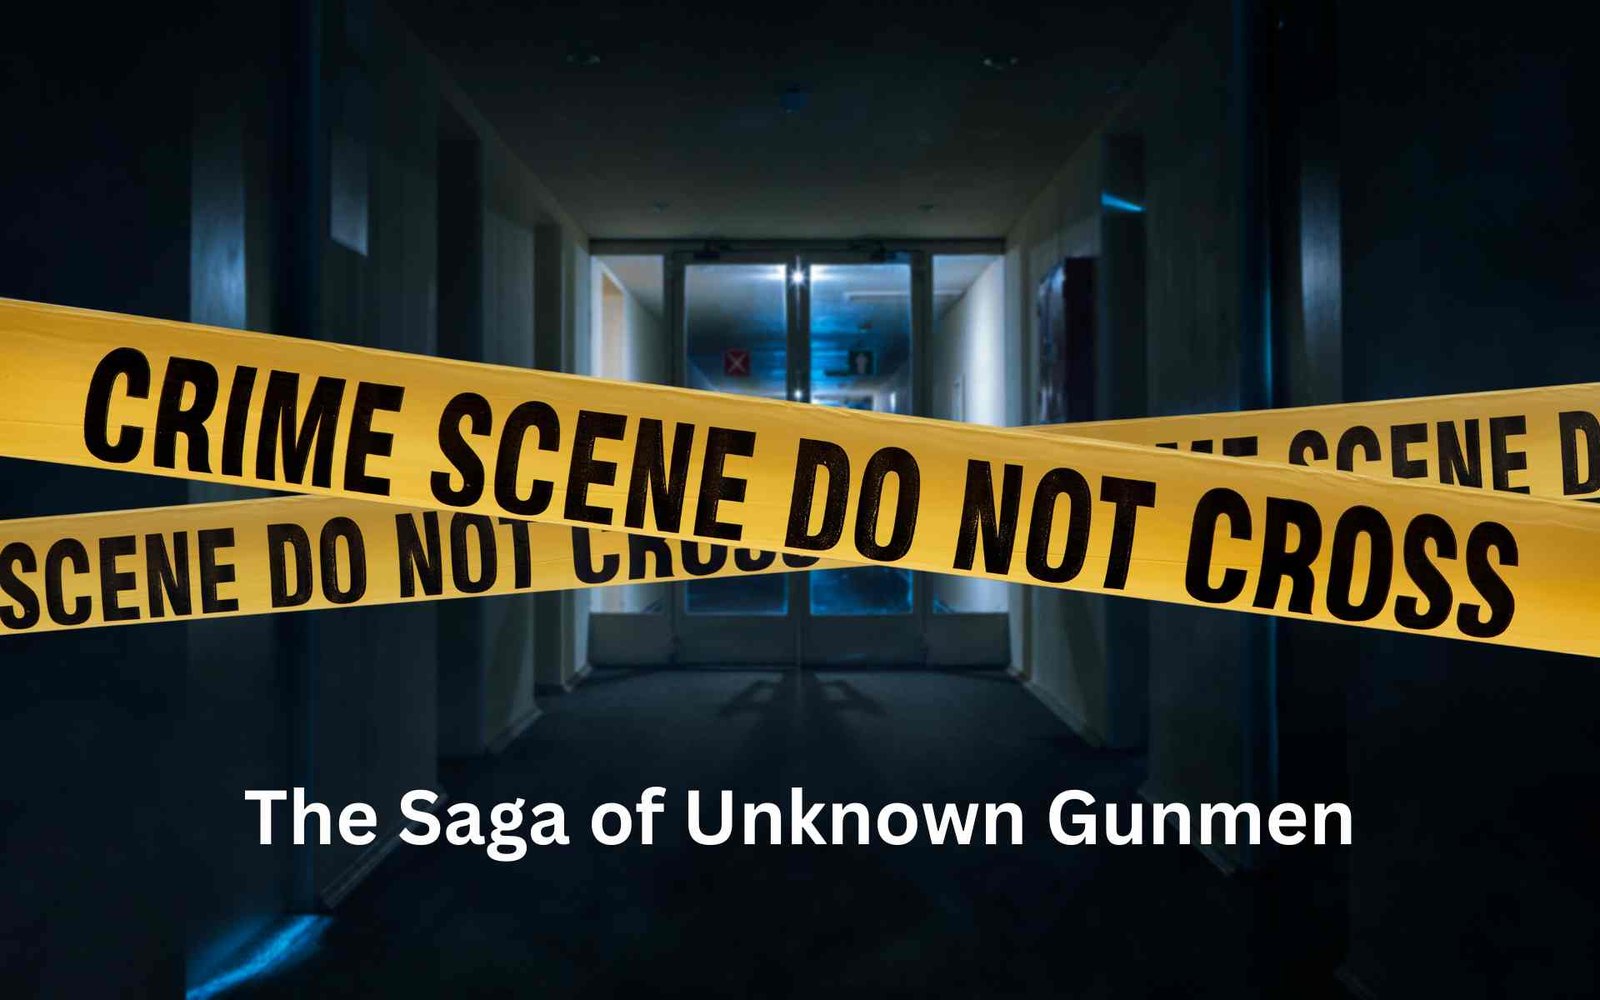 The Saga of Unknown Gunmen